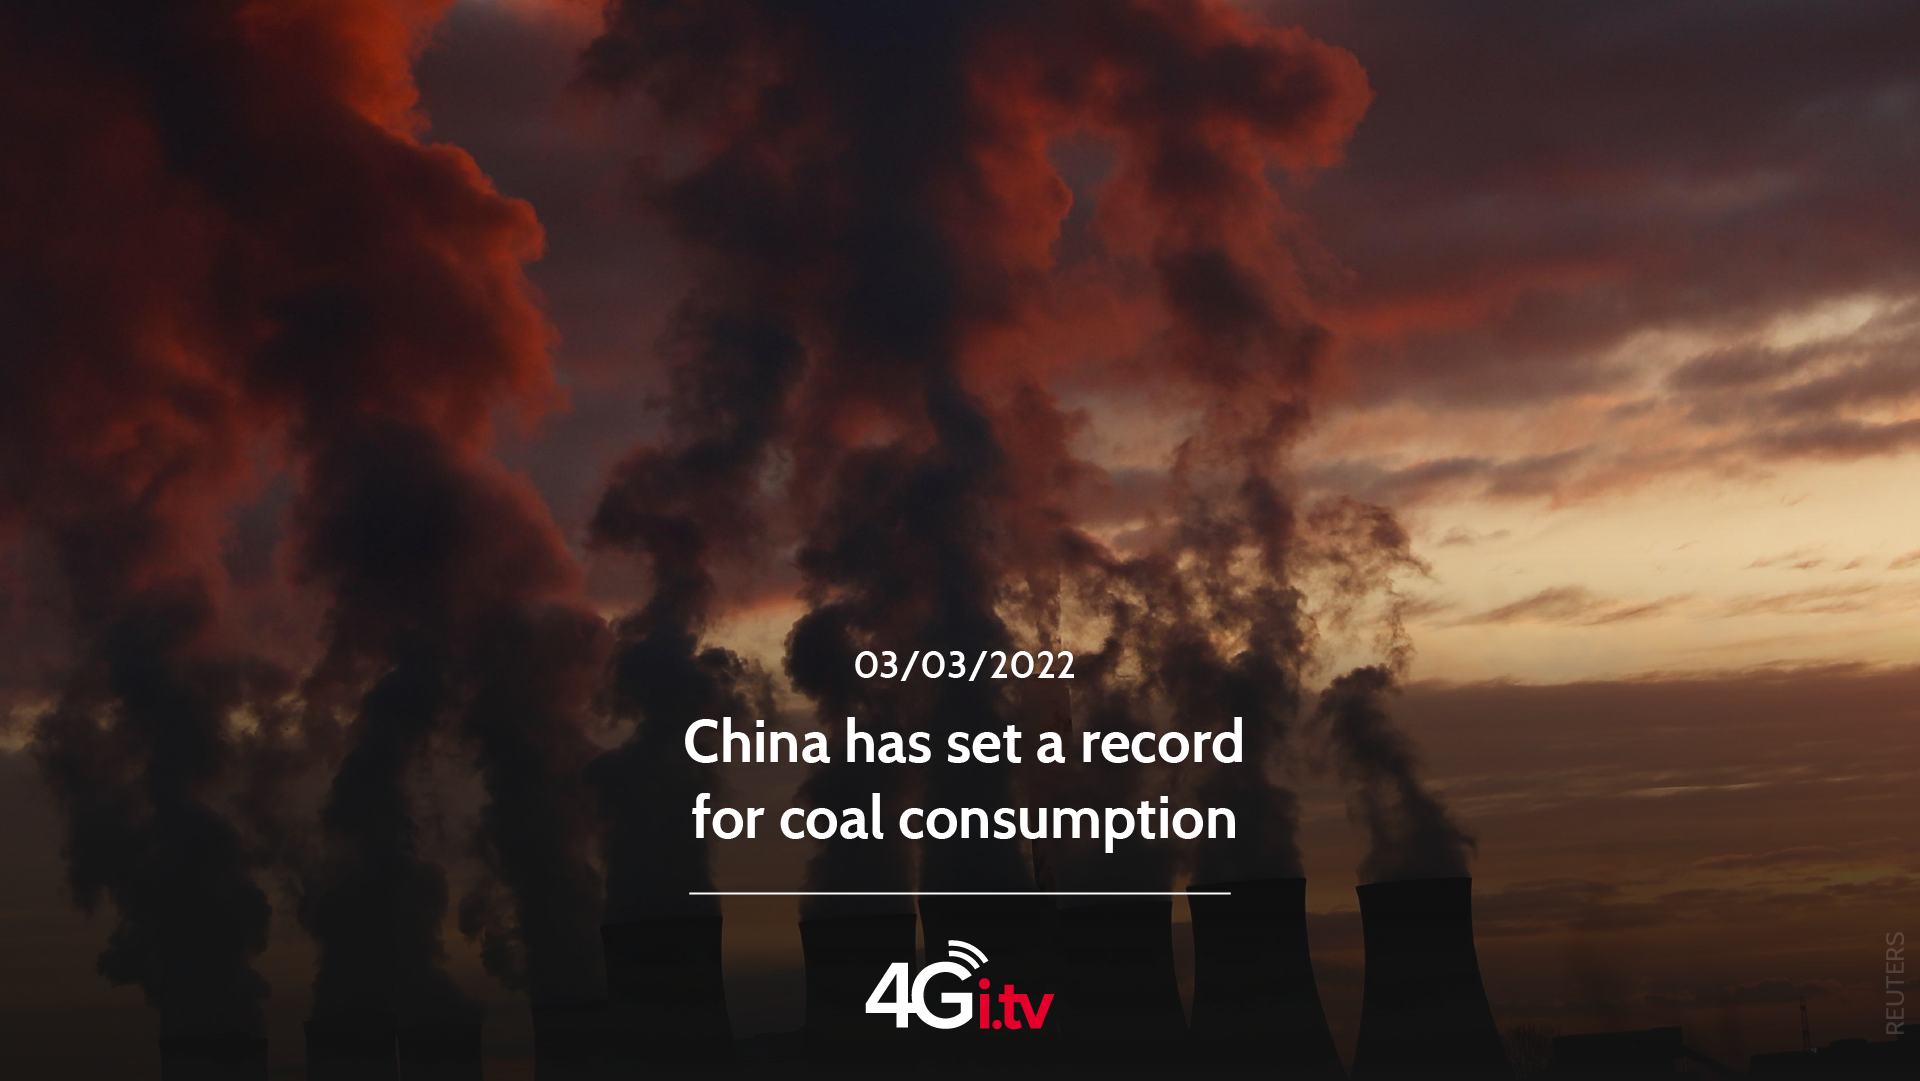 Lesen Sie mehr über den Artikel China has set a record for coal consumption